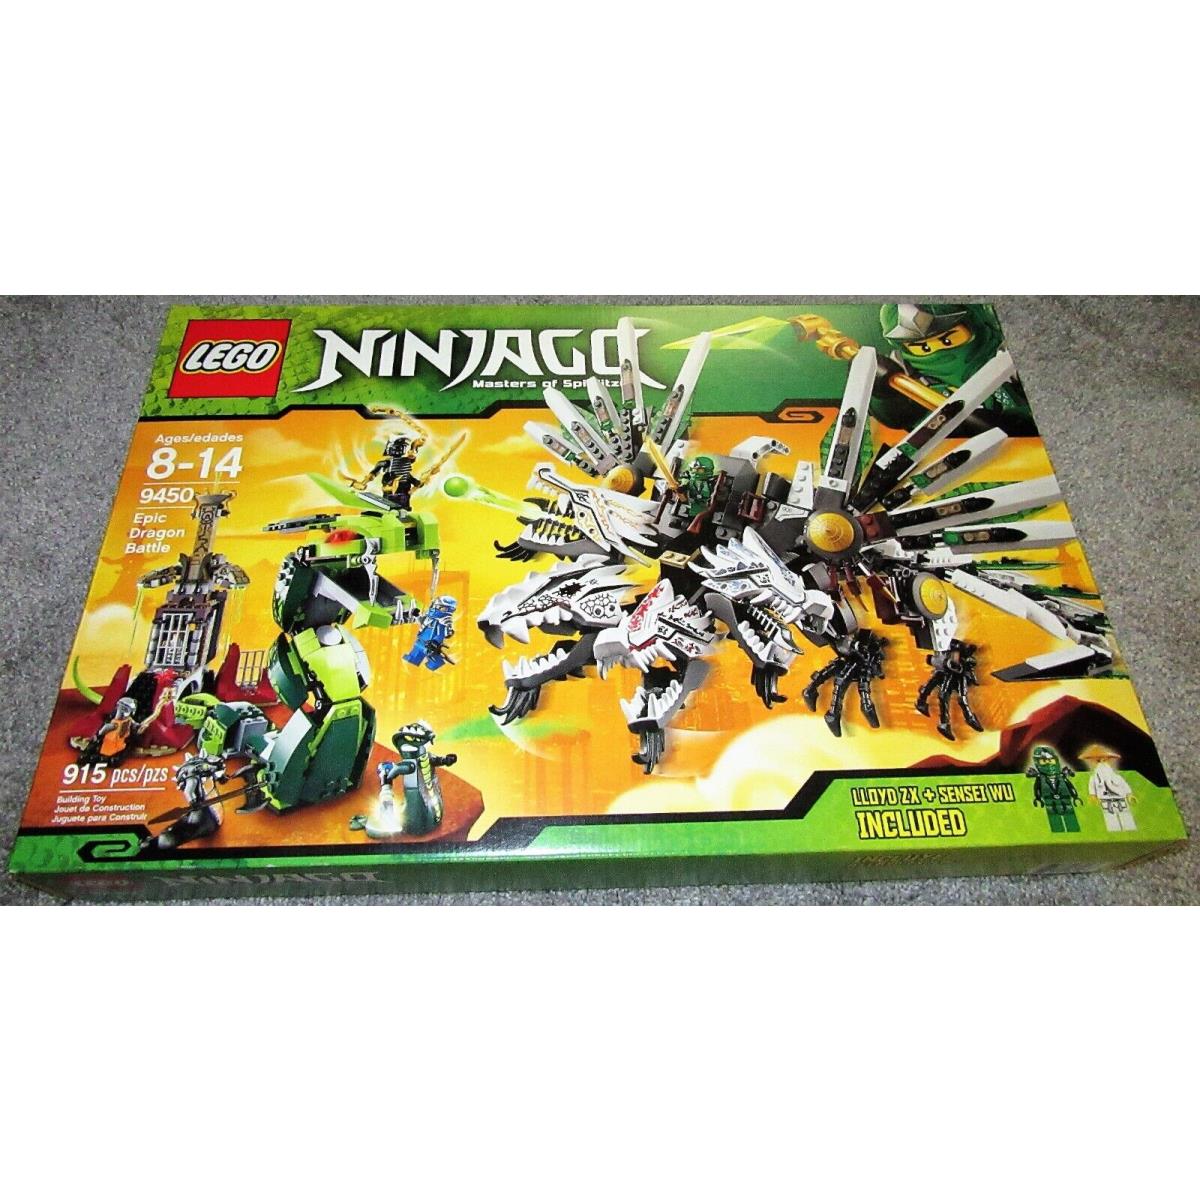 Lego Ninjago 9450 Epic Dragon Battle Retired Nisb 7 Minifigs 4 Headed Dragon